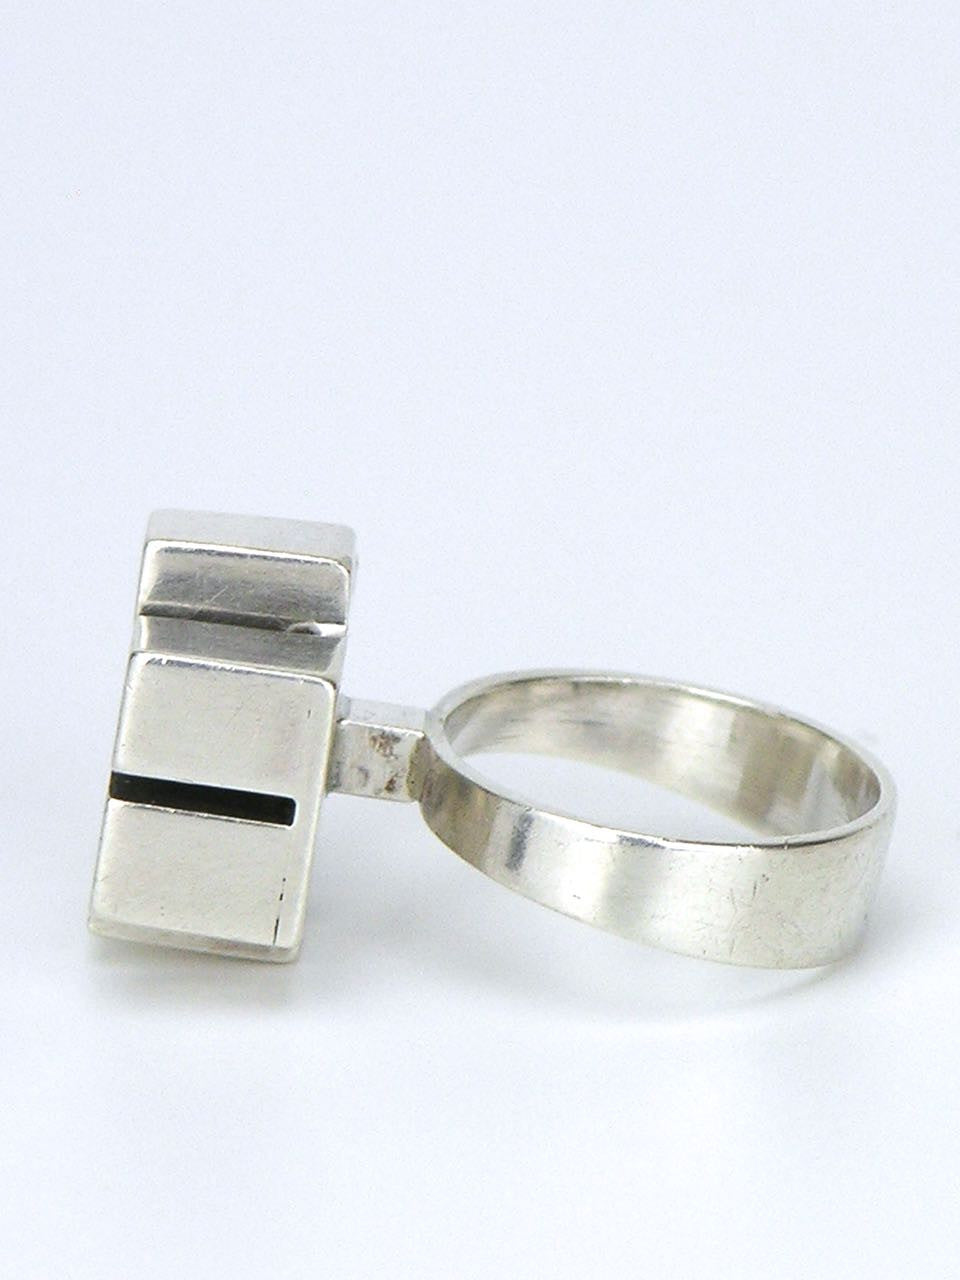 Swedish silver modernist cube ring